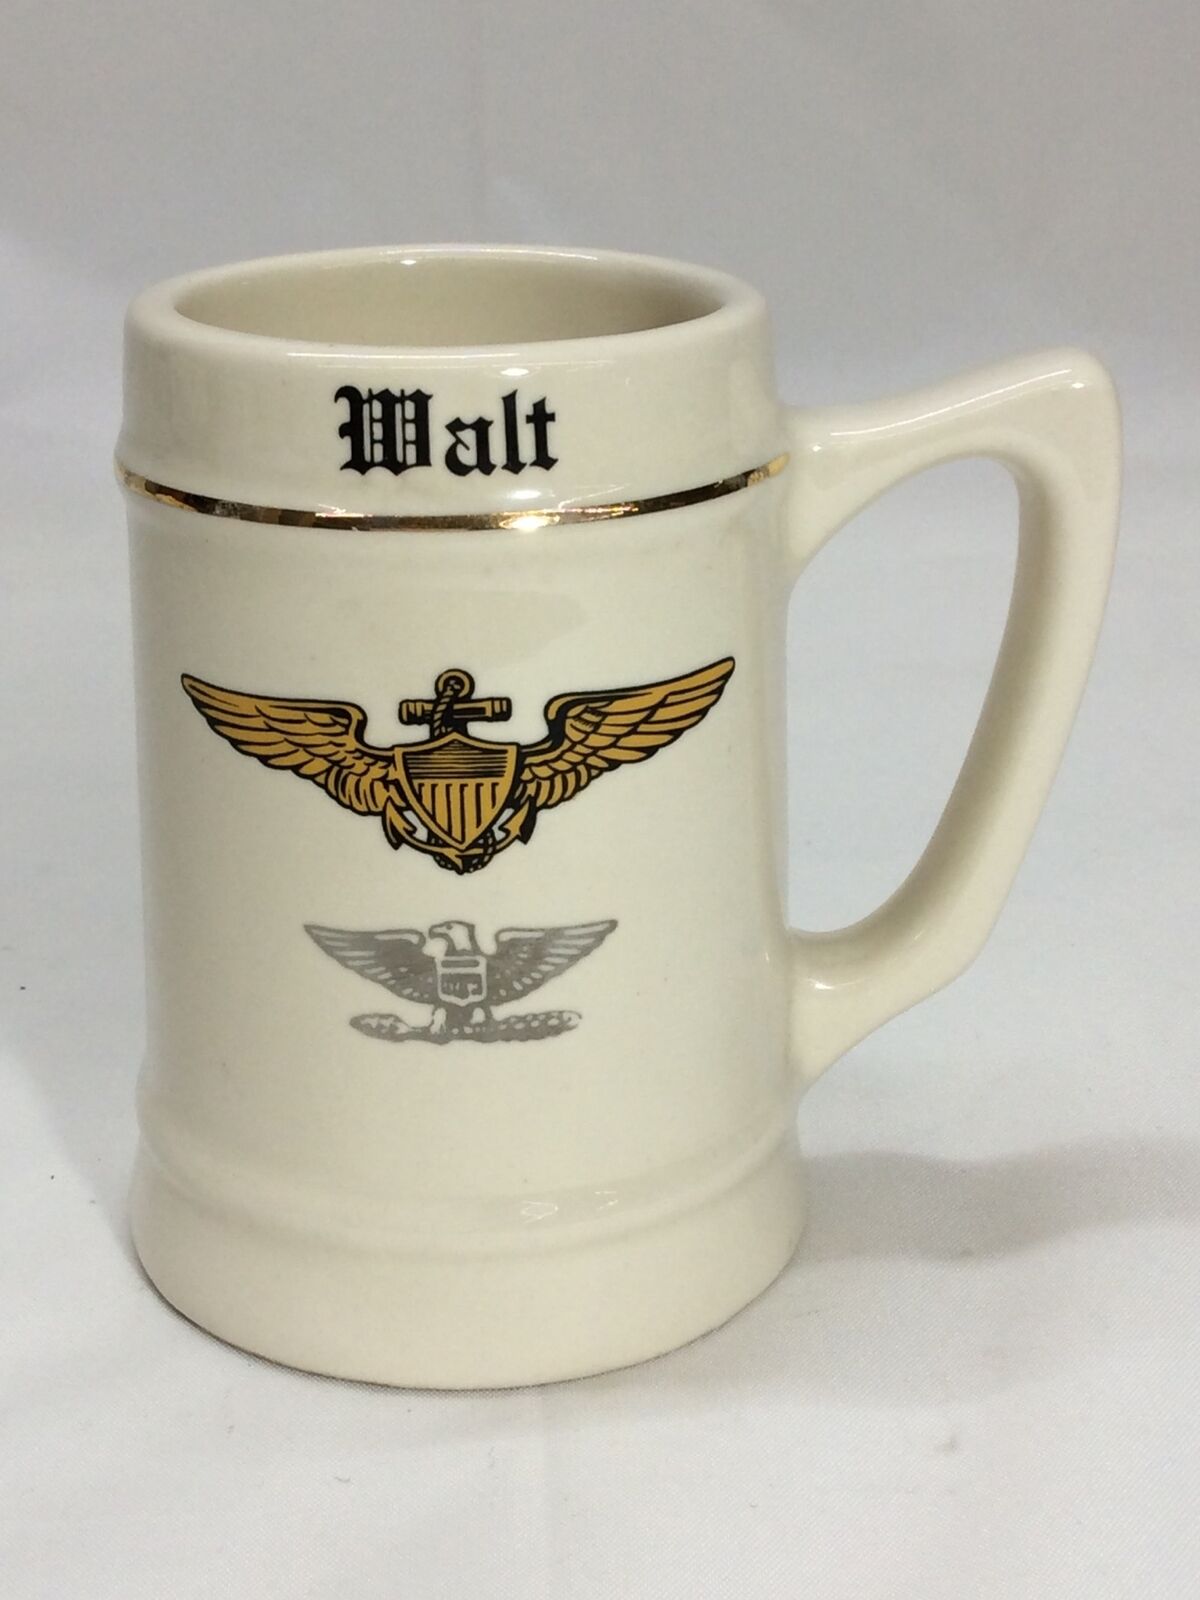 Named Vintage Military Ceramic Beer Mug Navy Captain Pilot Wings Gold Trim USN